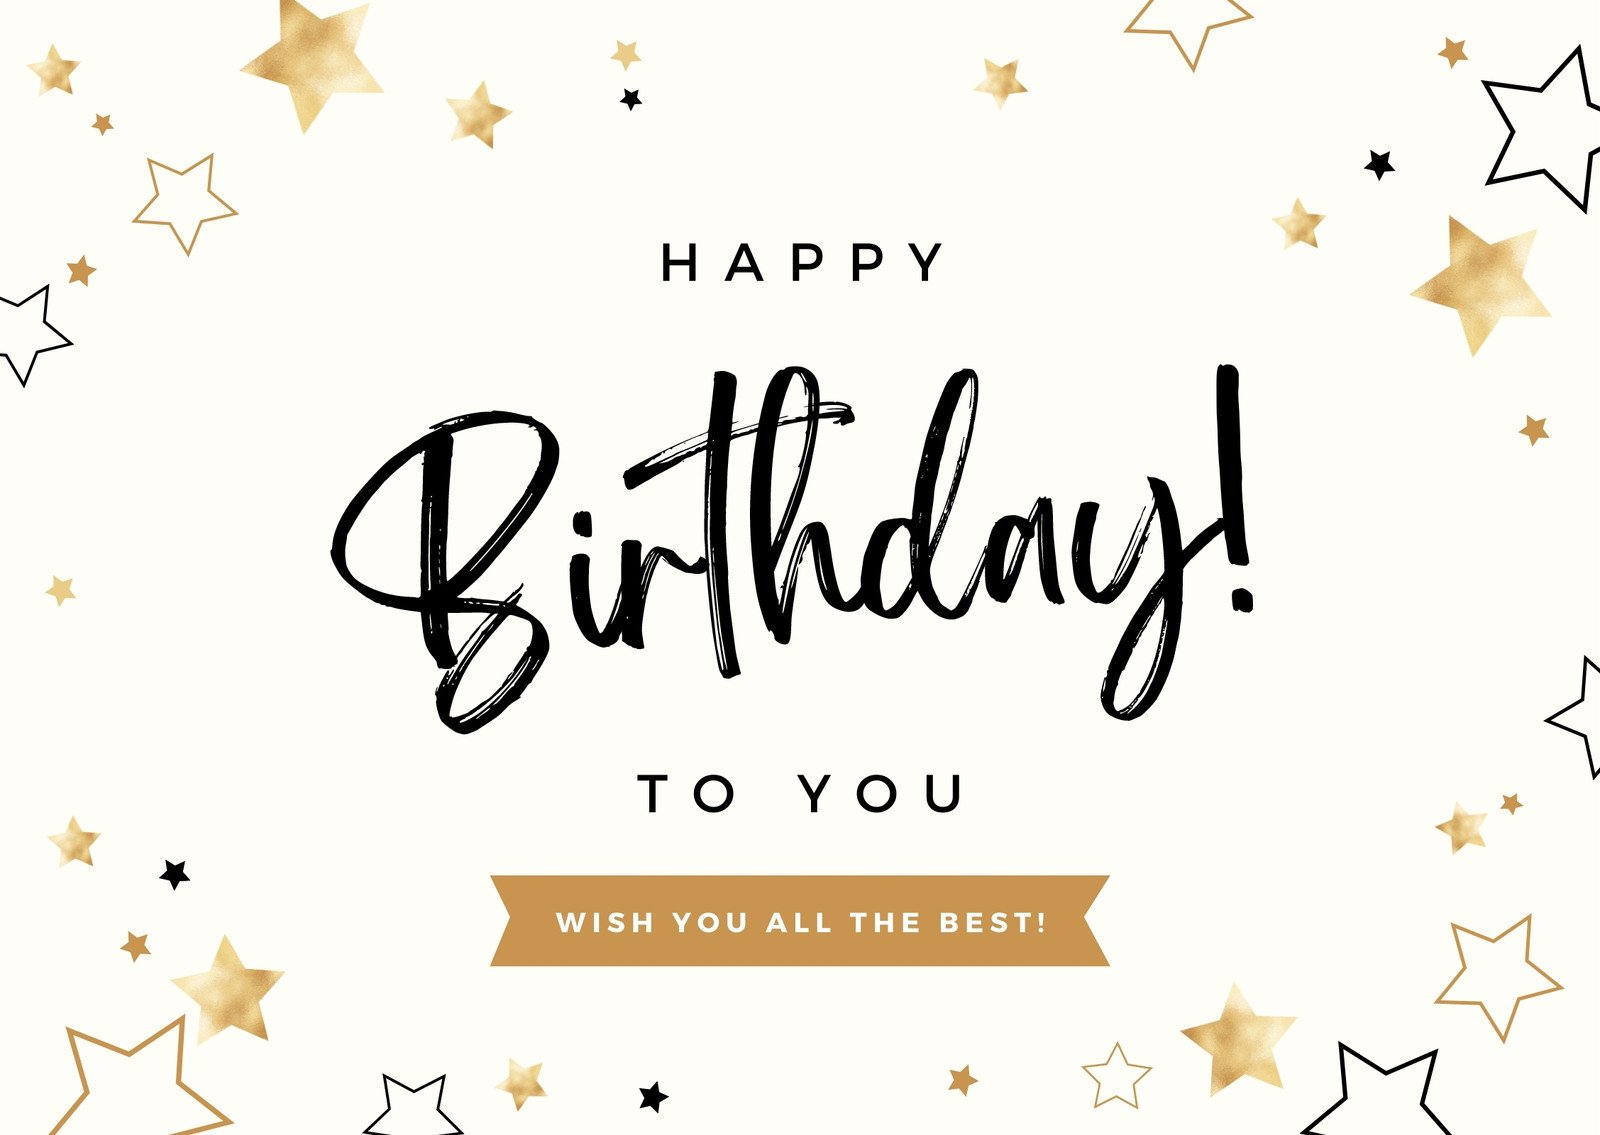 Free, Custom Printable Birthday Card Templates | Canva inside Customized Birthday Cards Free Printable